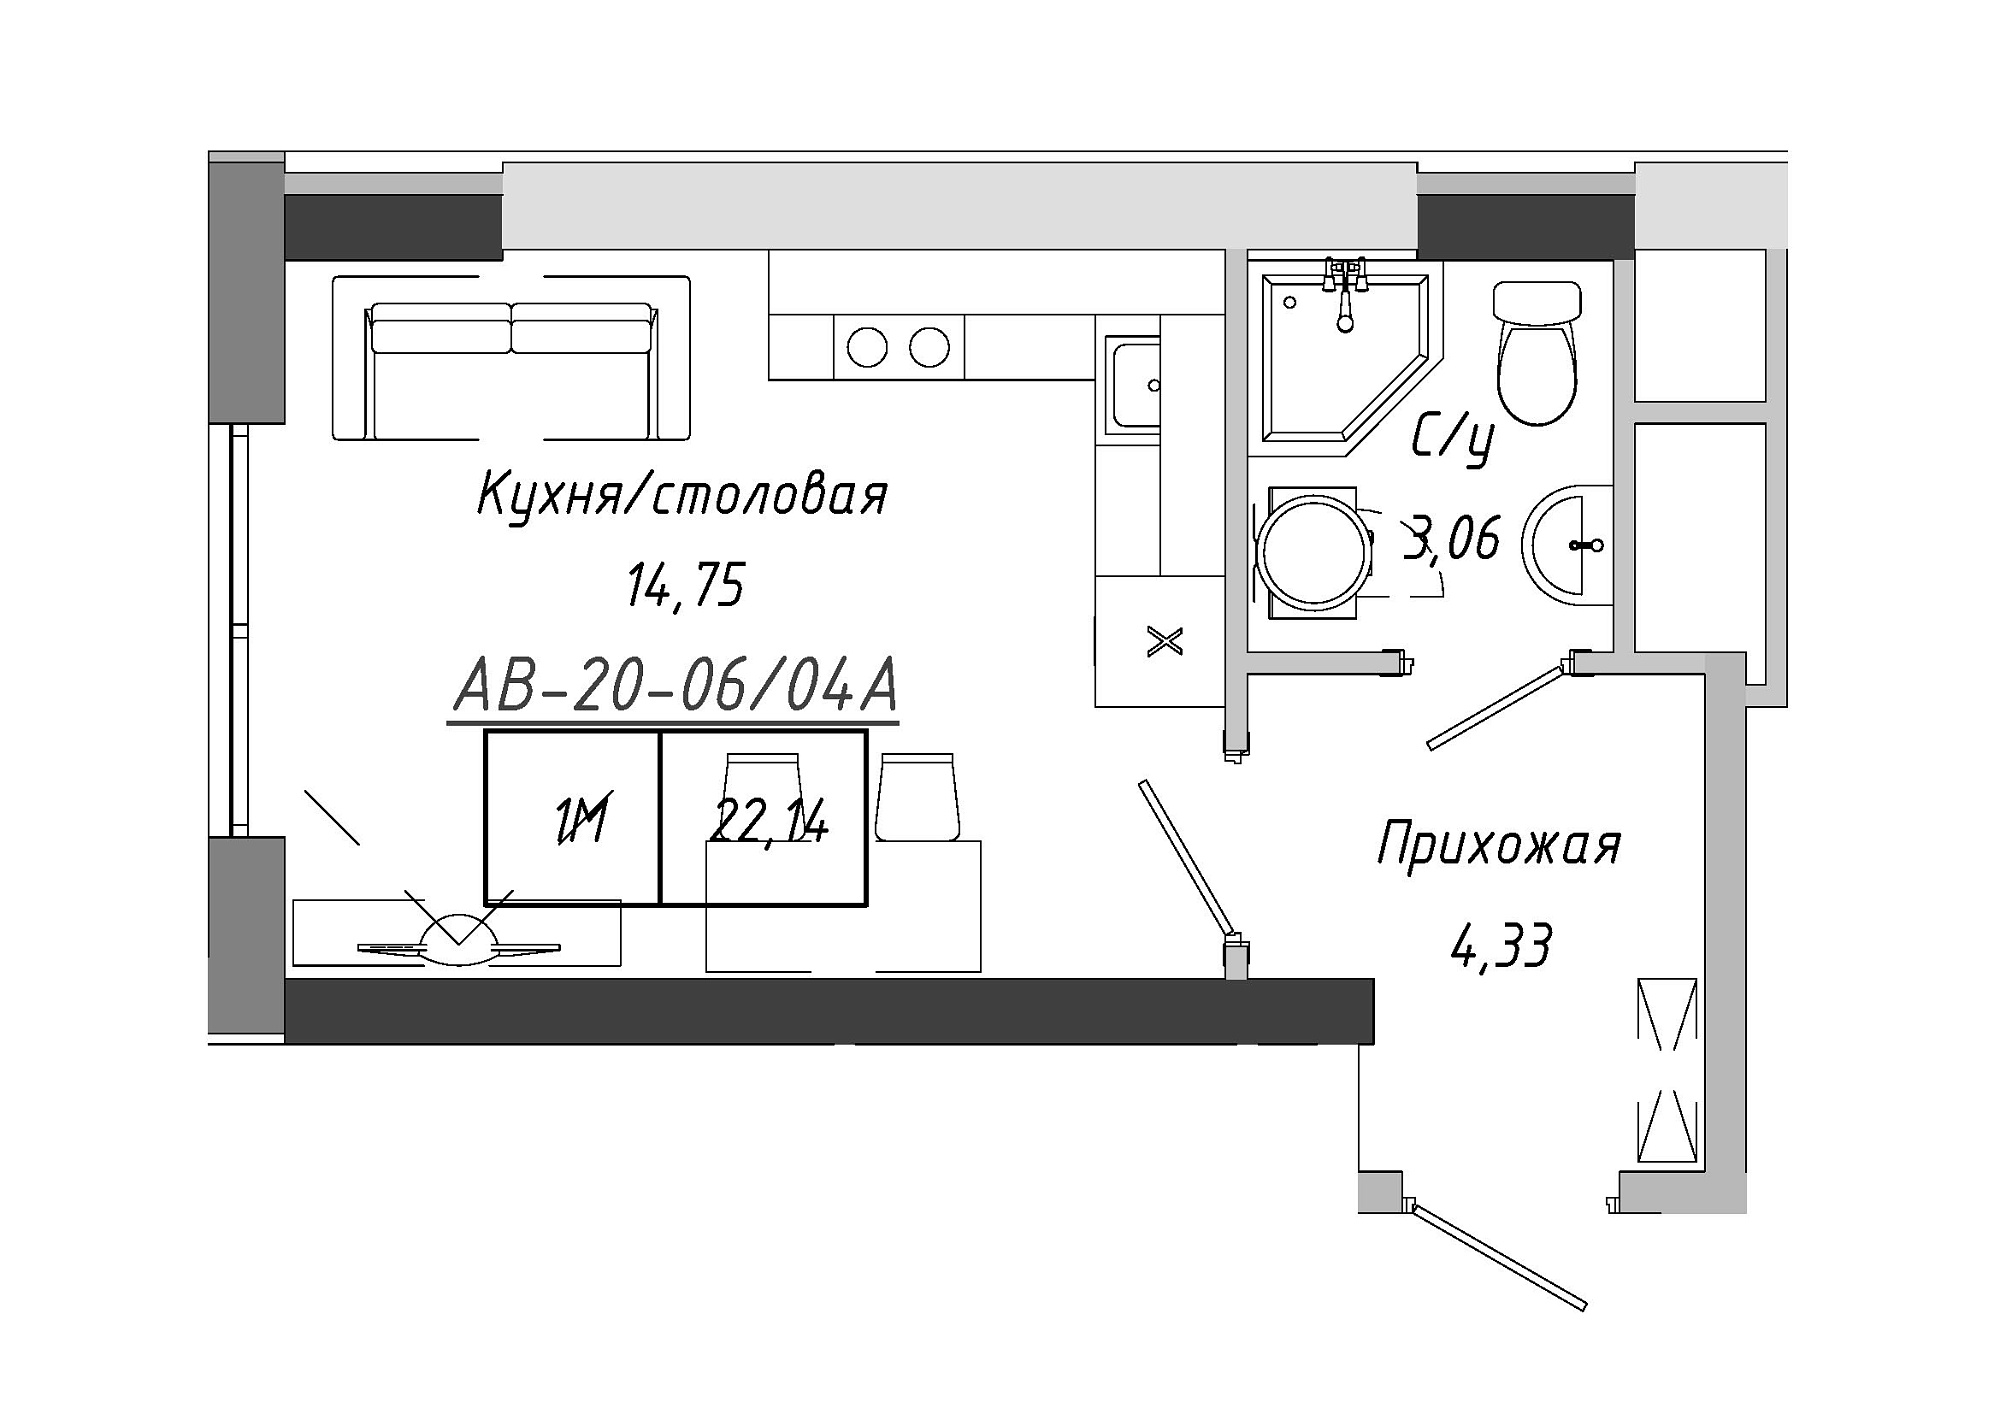 Planning Smart flats area 21.3m2, AB-20-06/0004а.